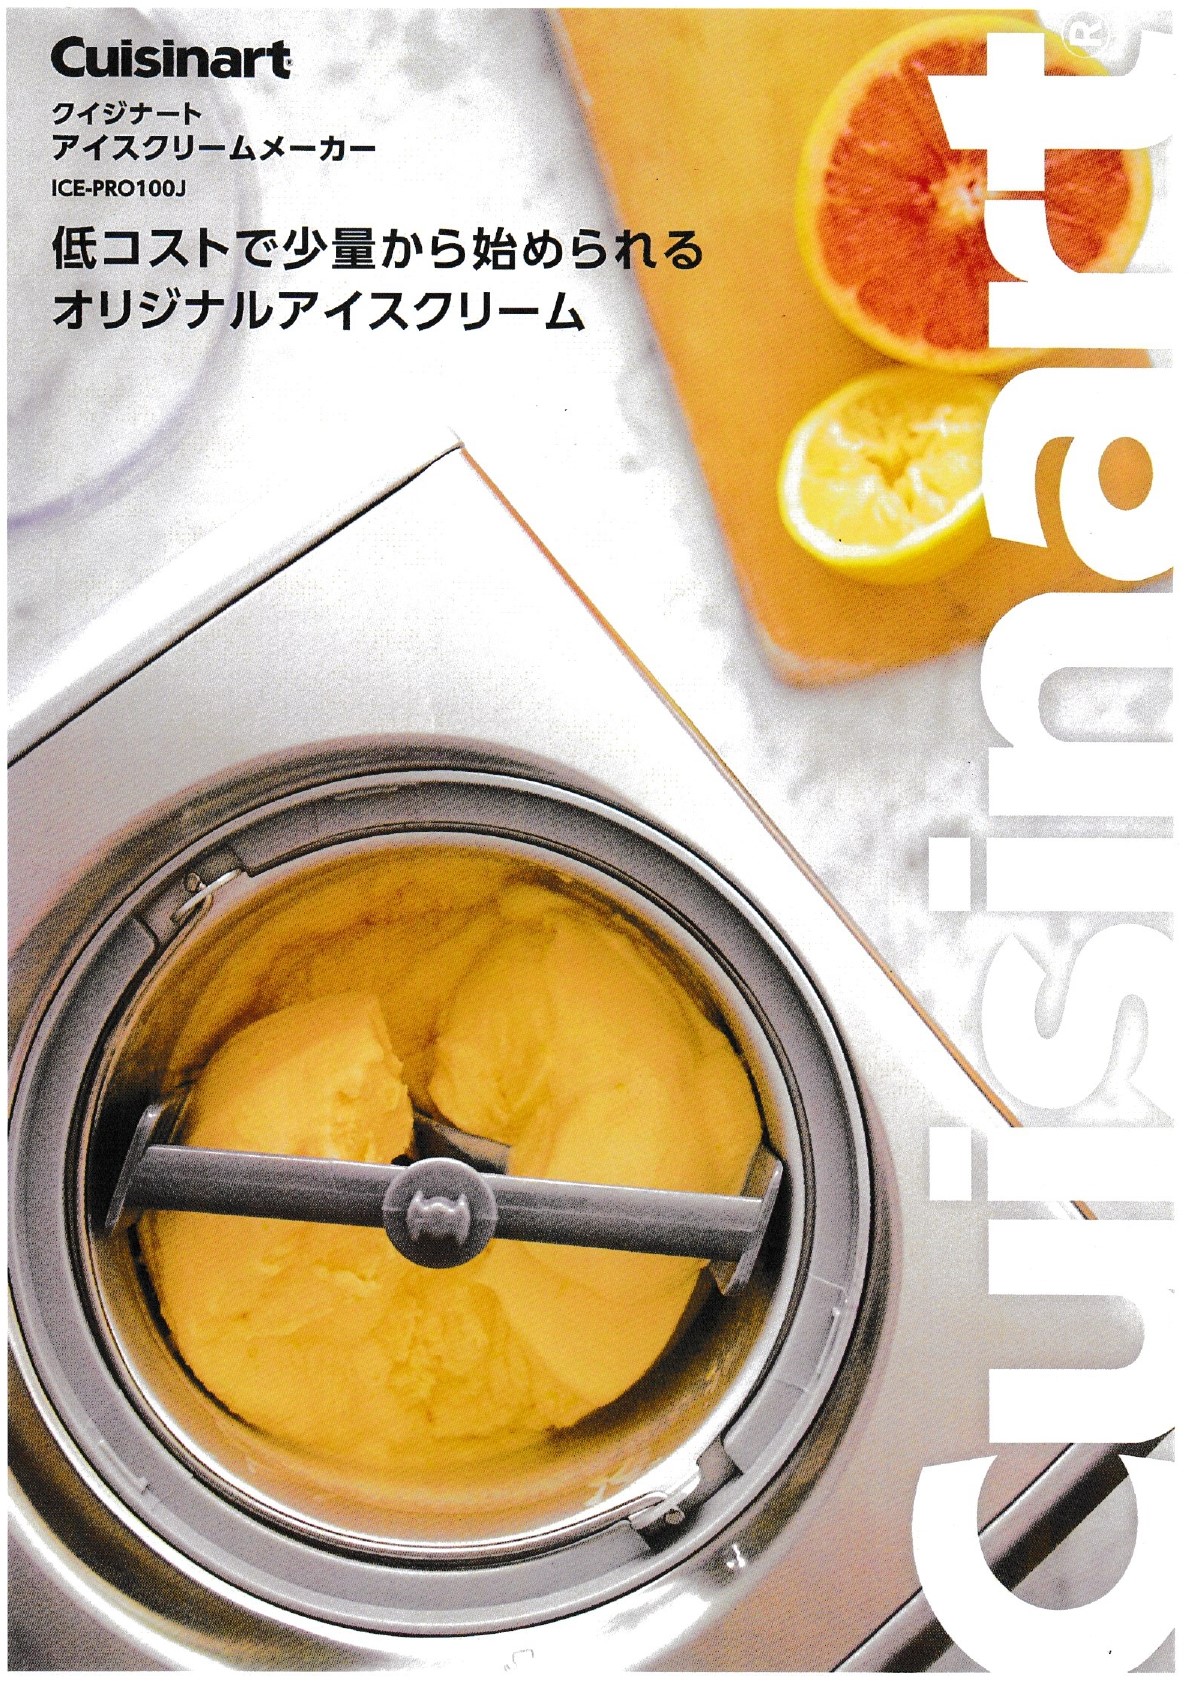  Japan domestic regular imported goods ki Sinar to(Cuisinart) ice cream machine ice cream maker ICE-PRO100J